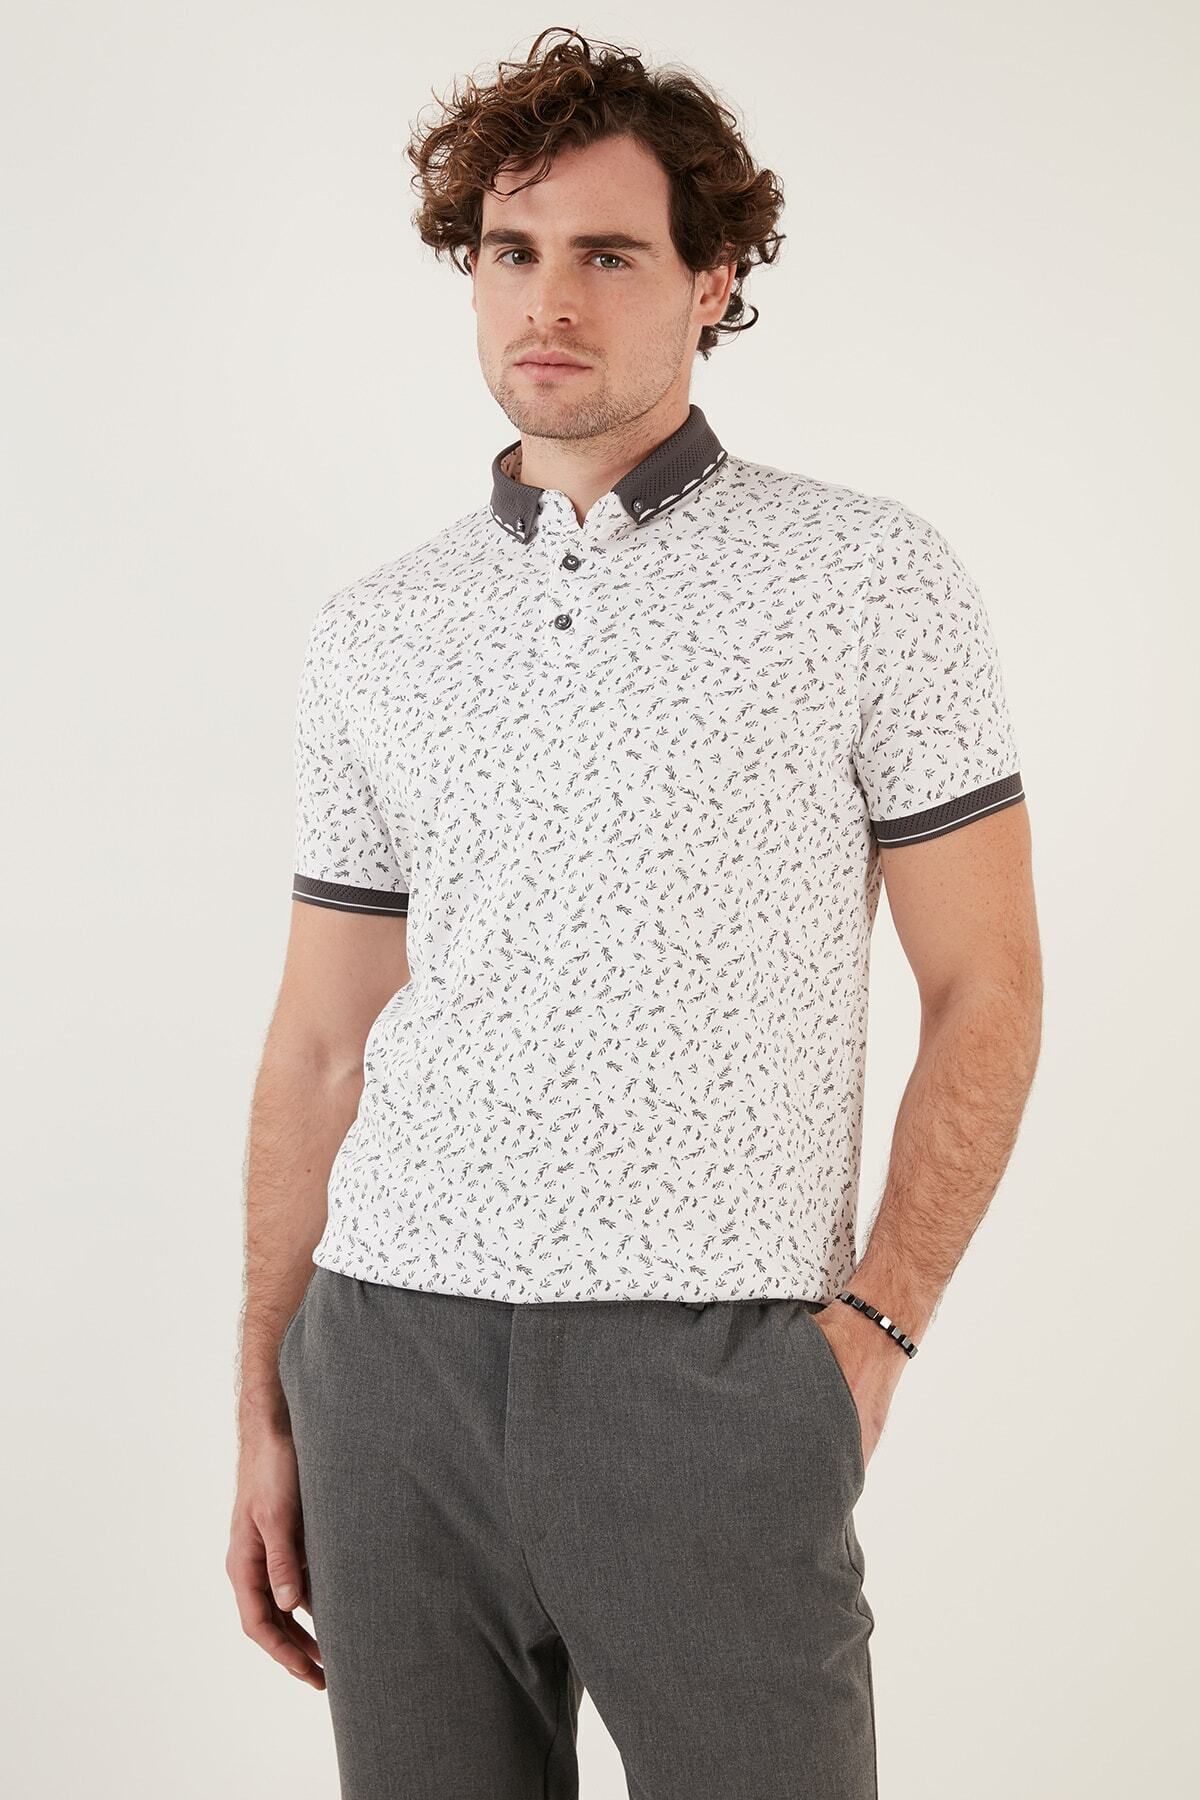 Buratti Pamuk Karışımlı Desenli Slim Fit Polo T Shirt Erkek T Shirt 646b3270